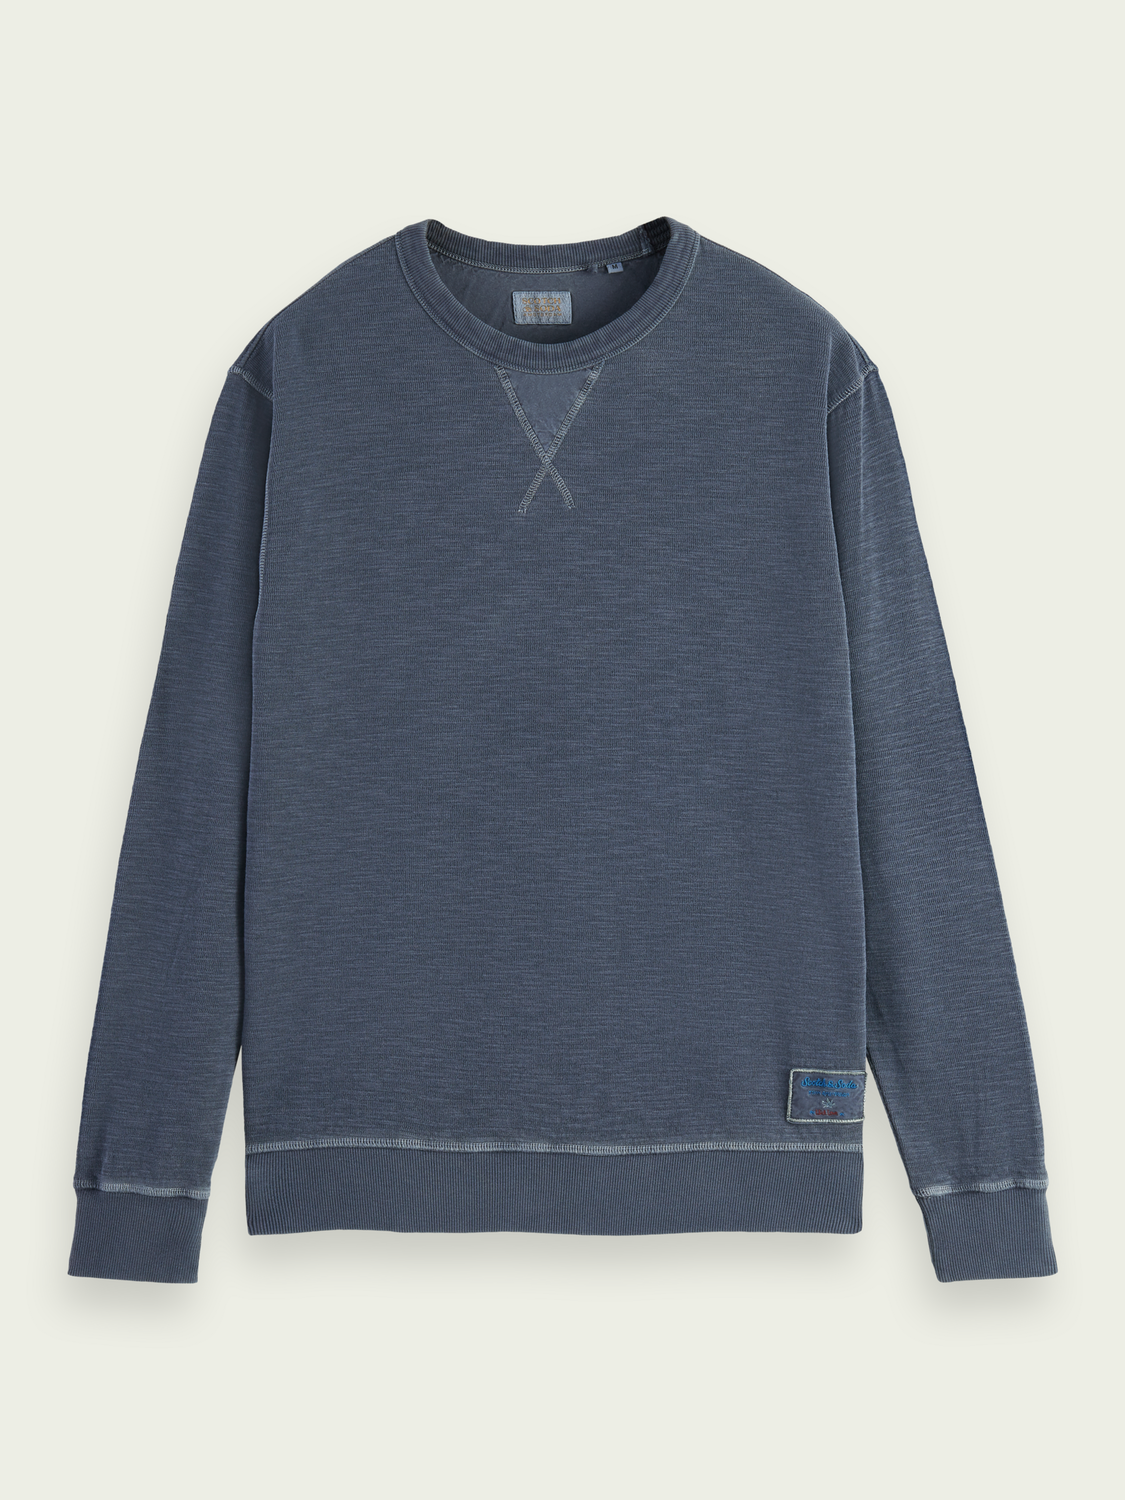 Scotch & Soda - Structured Garment-Dyed Sweatshirt - Night